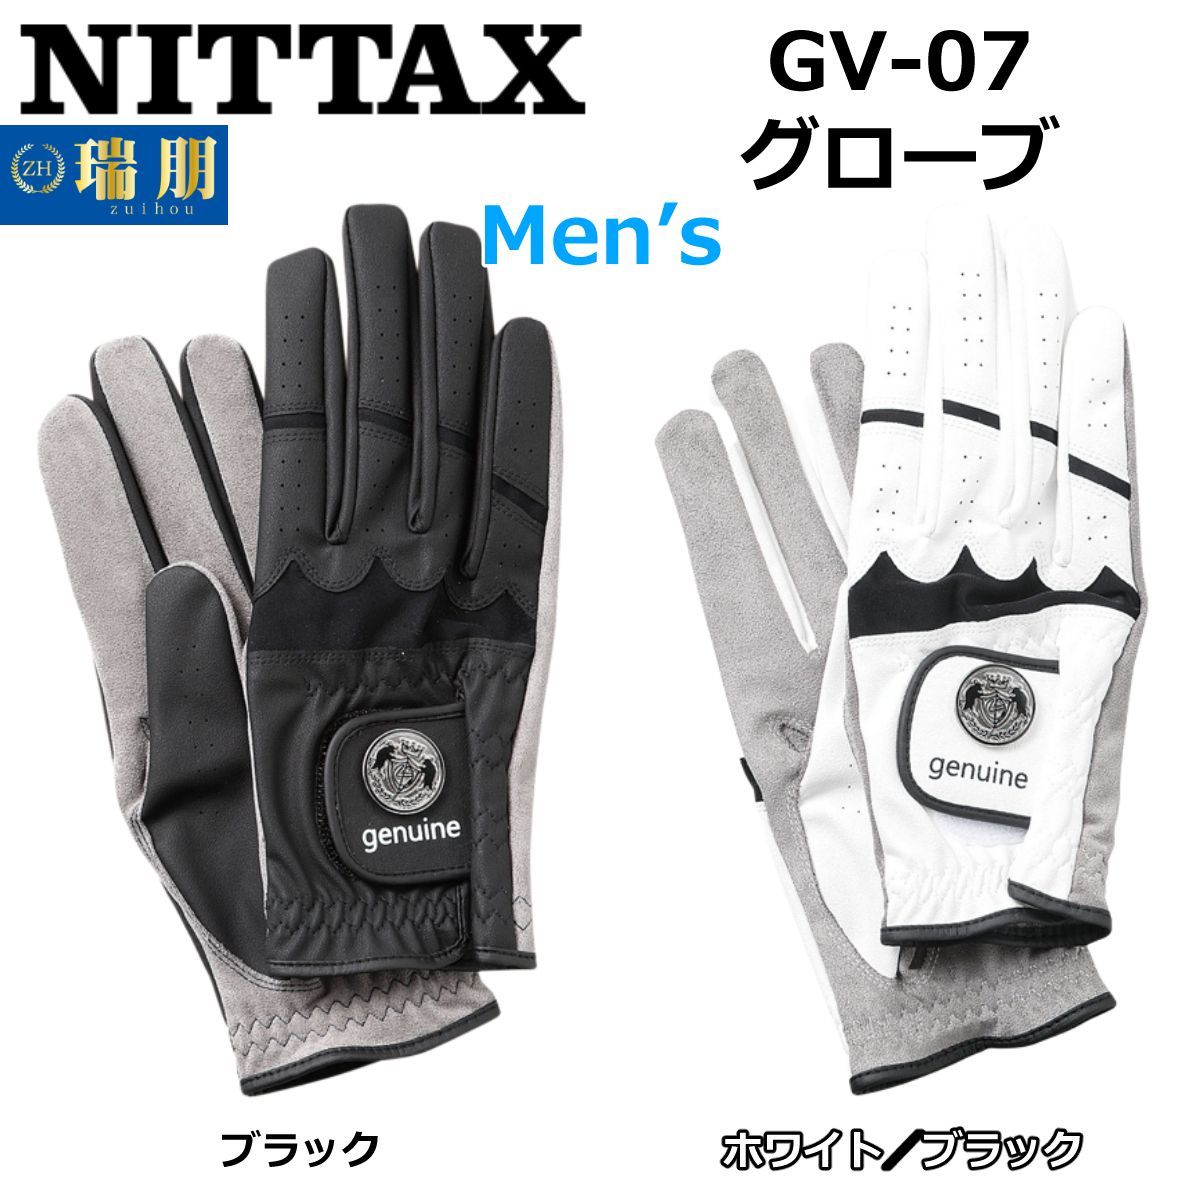 NITTAX ニッタクス パークゴルフグローブ GV-07 Men's